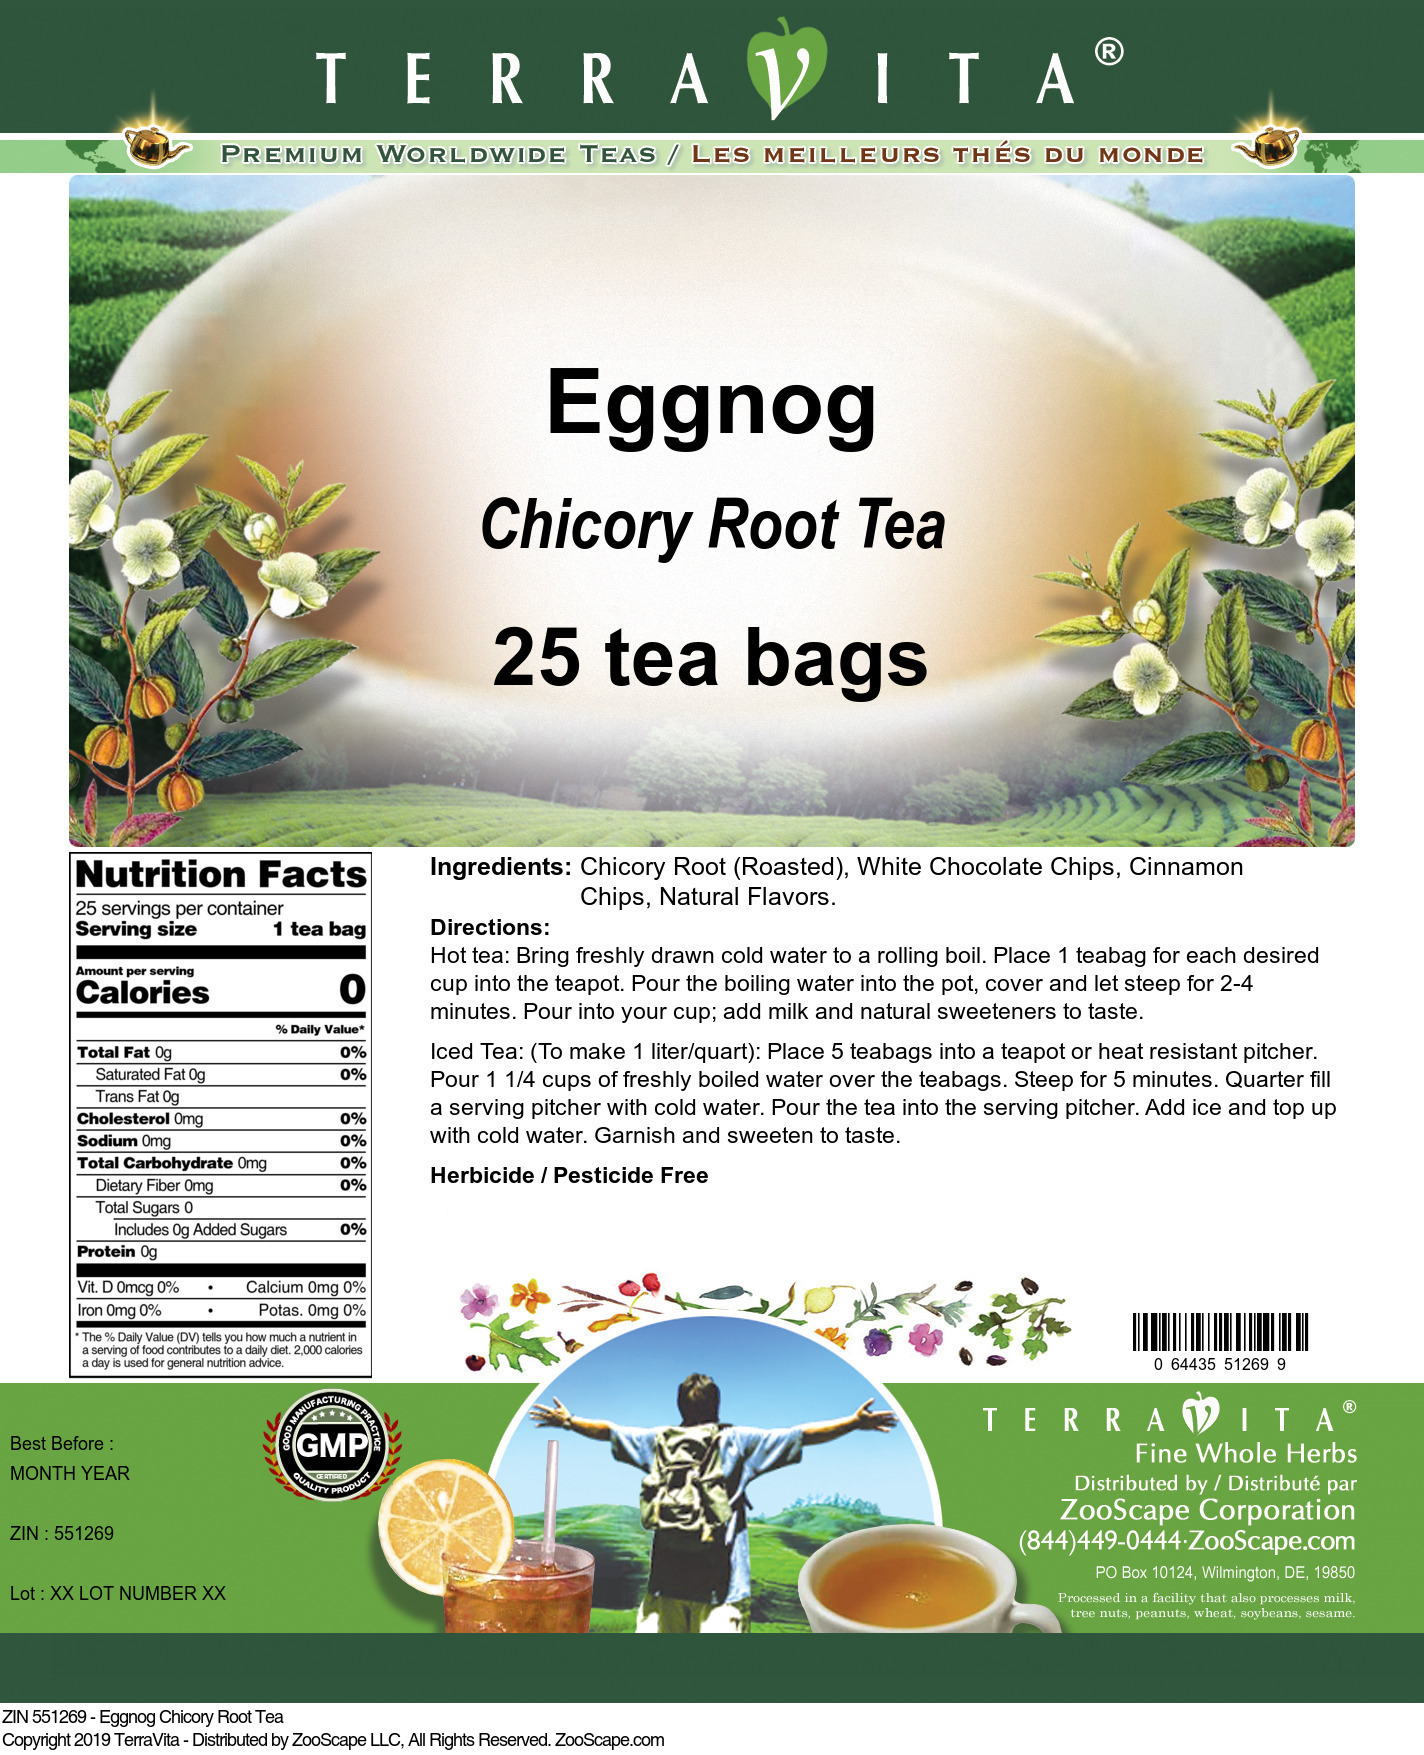 Eggnog Chicory Root Tea - Label